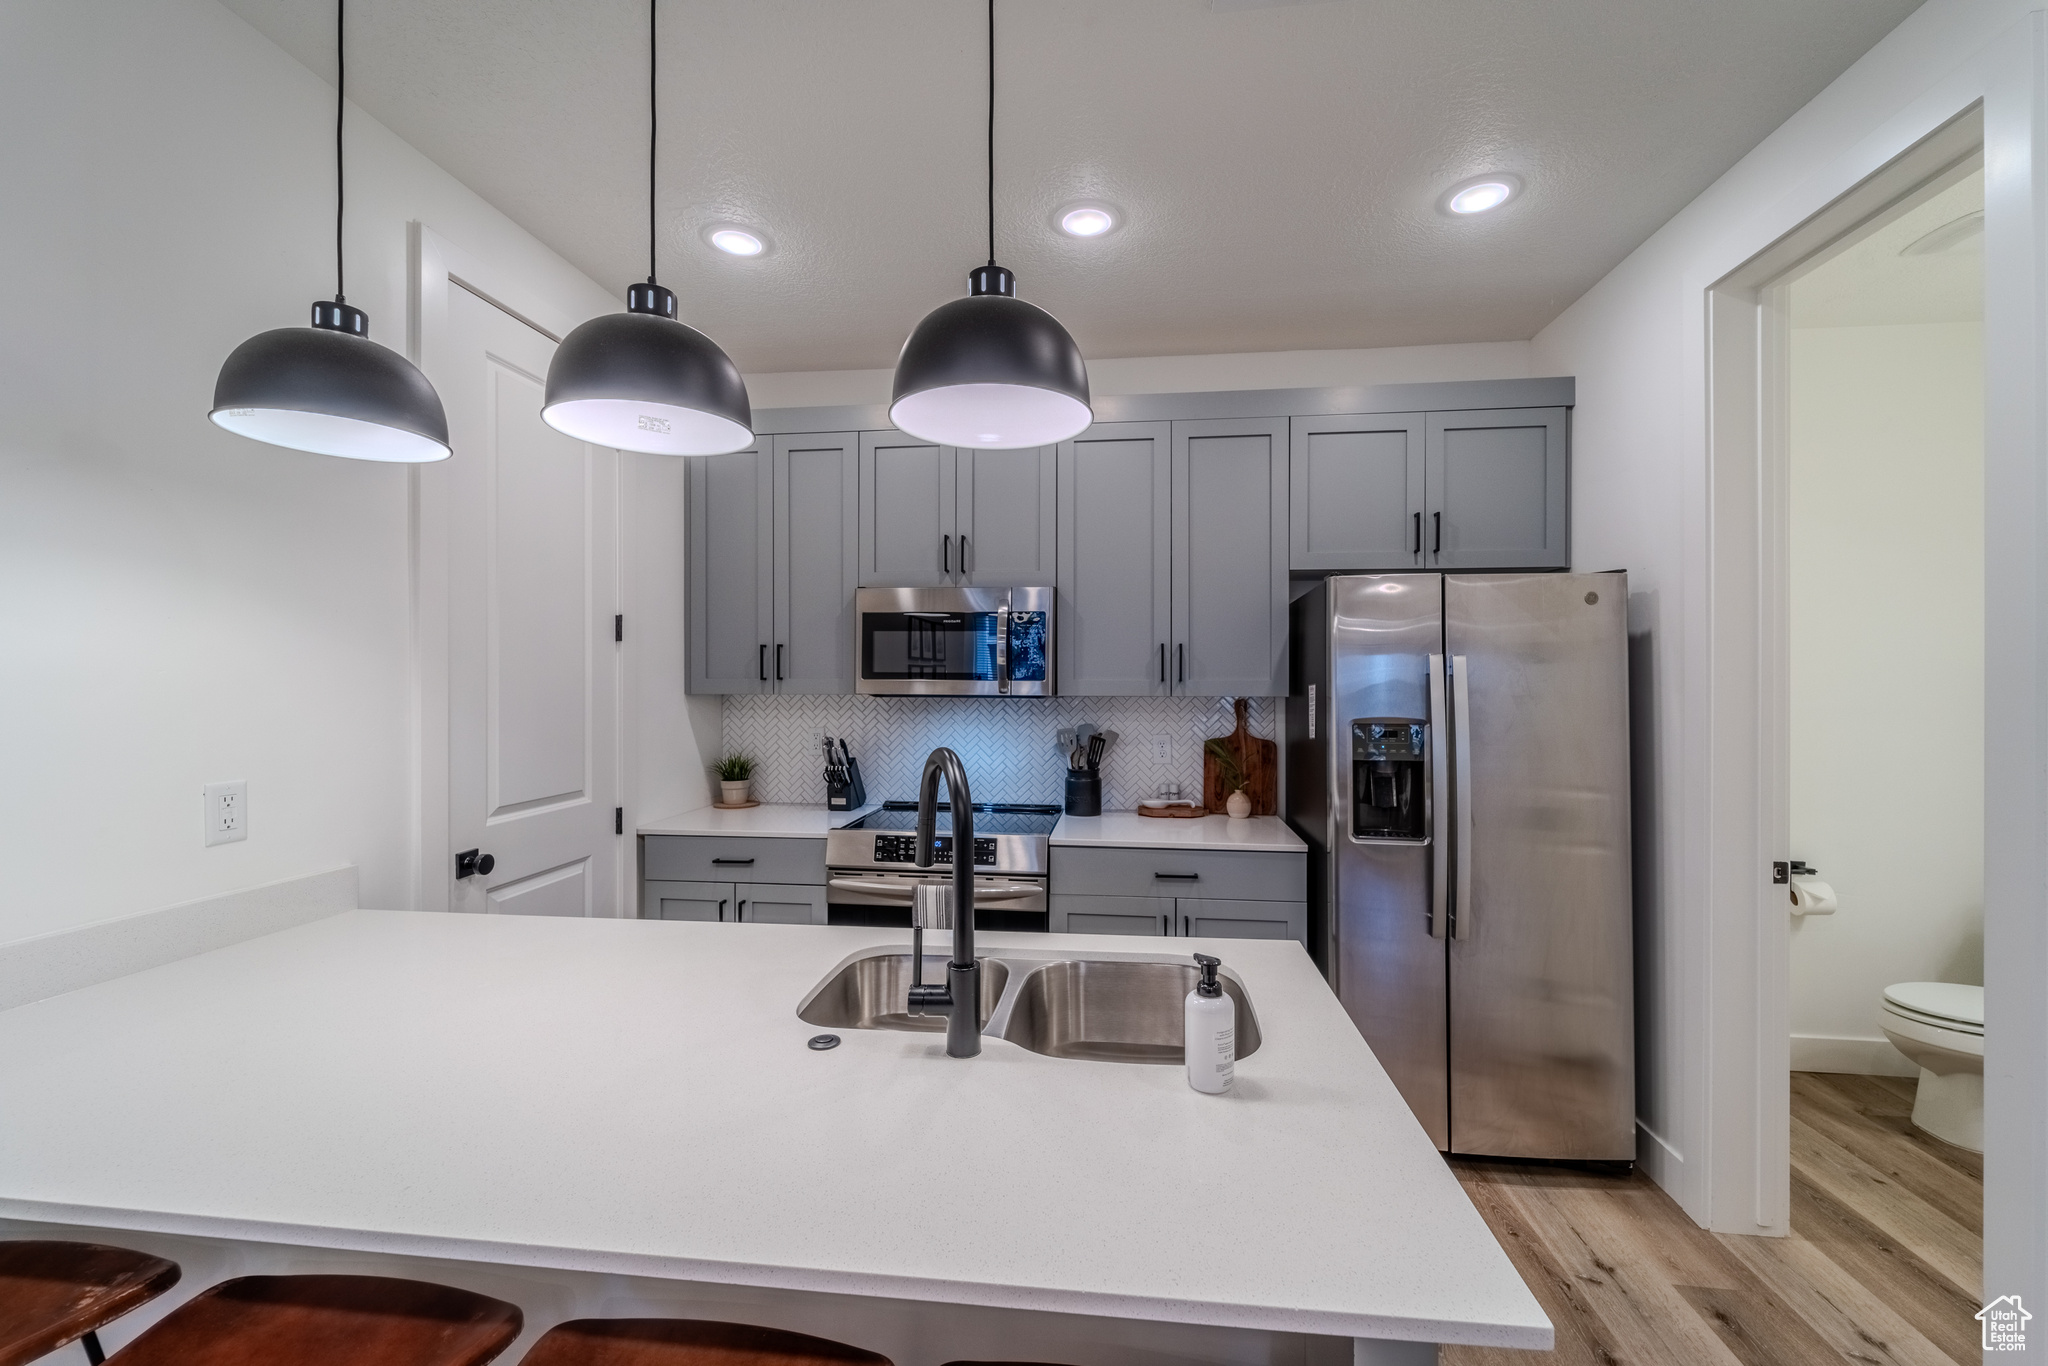 Kitchen featuring decorative light fixtures, light hardwood / wood-style flooring, tasteful backsplash, and stainless steel appliances